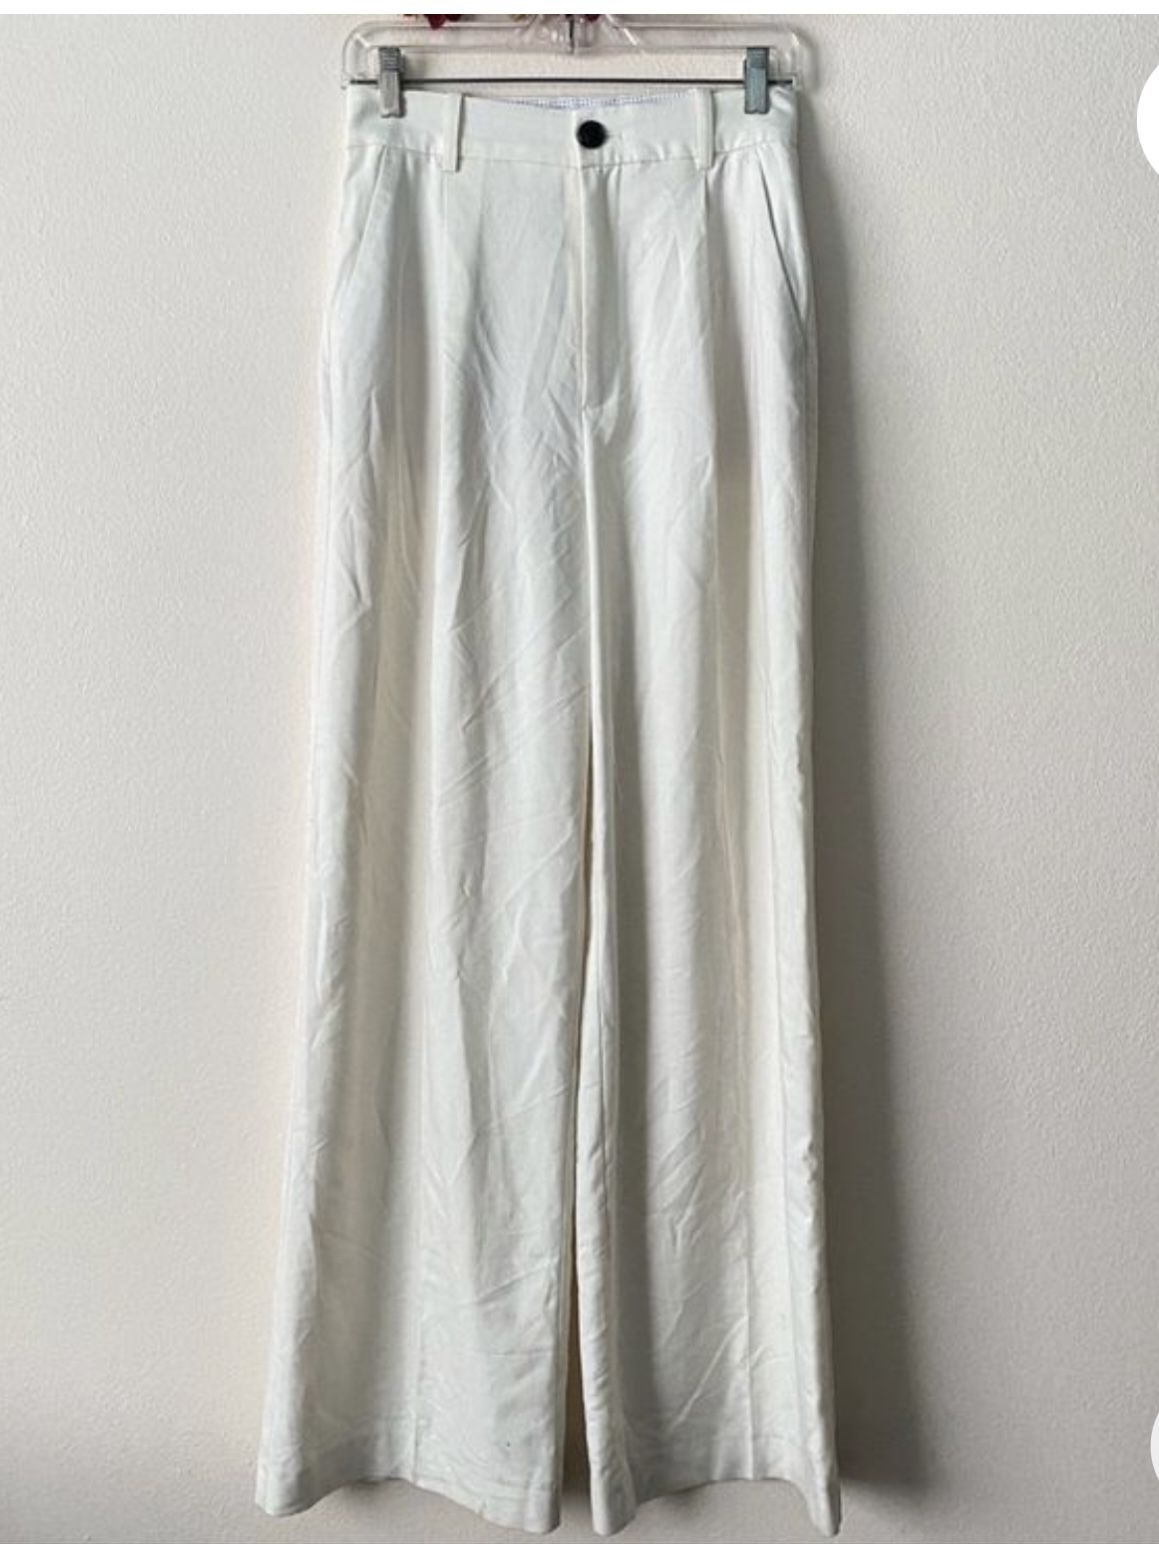 Zara Cream Pants (size S)